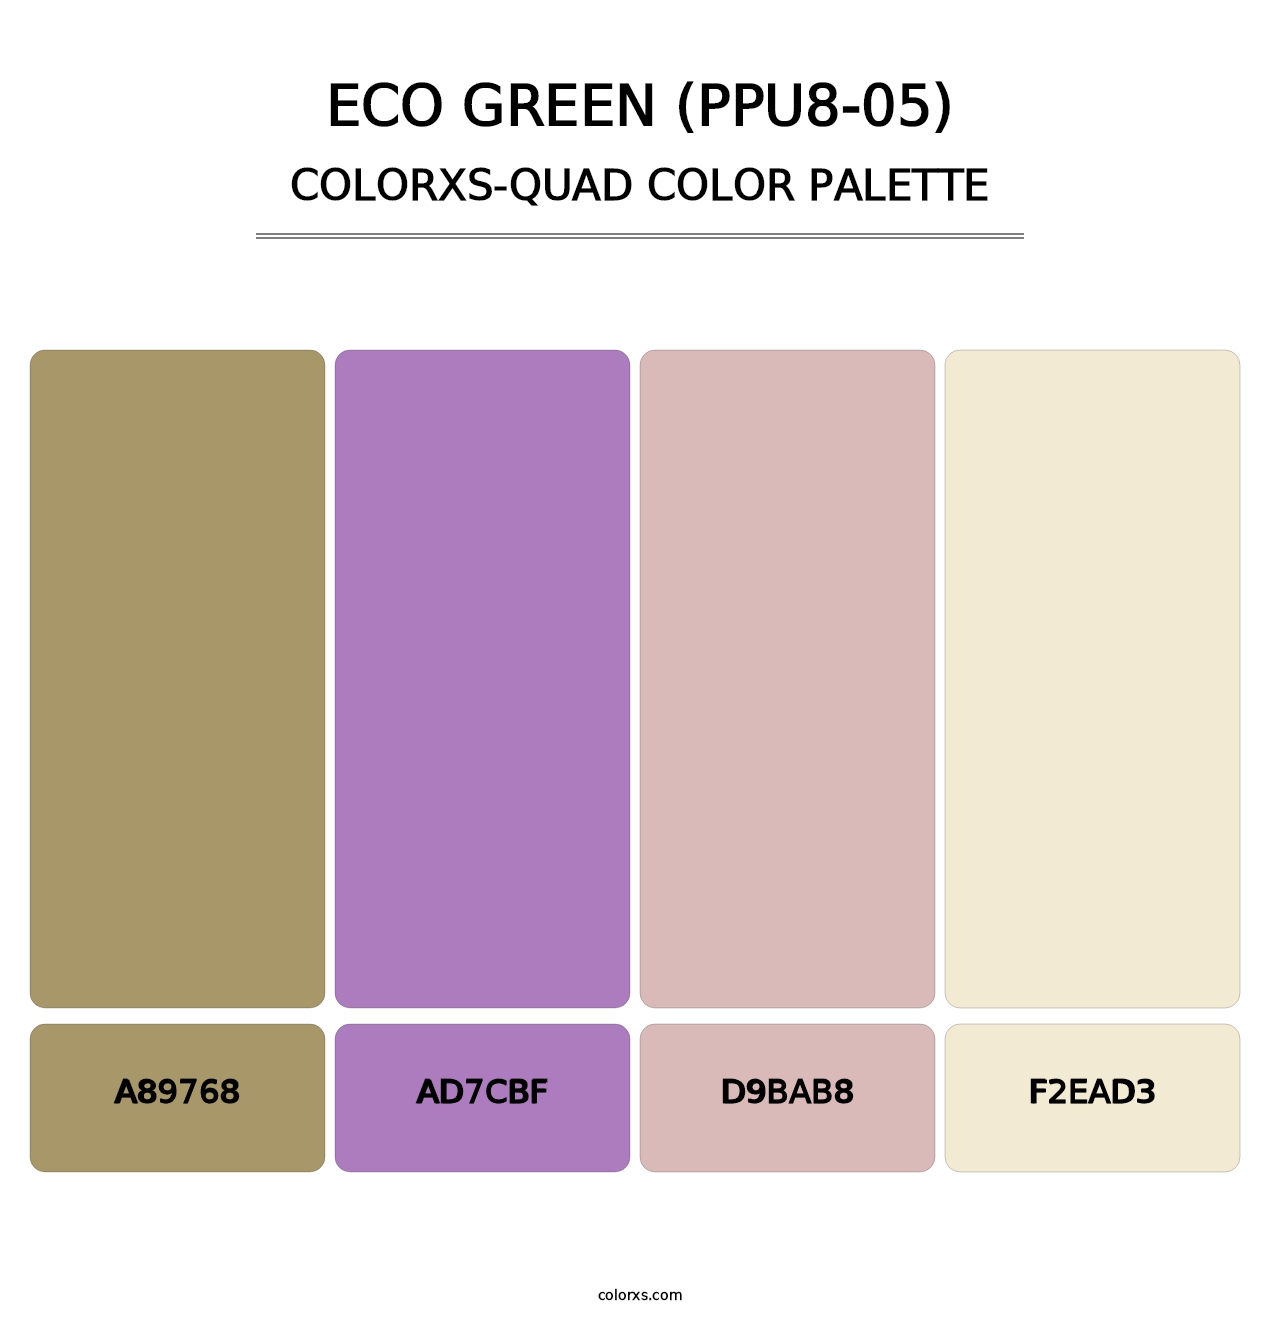 Eco Green (PPU8-05) - Colorxs Quad Palette